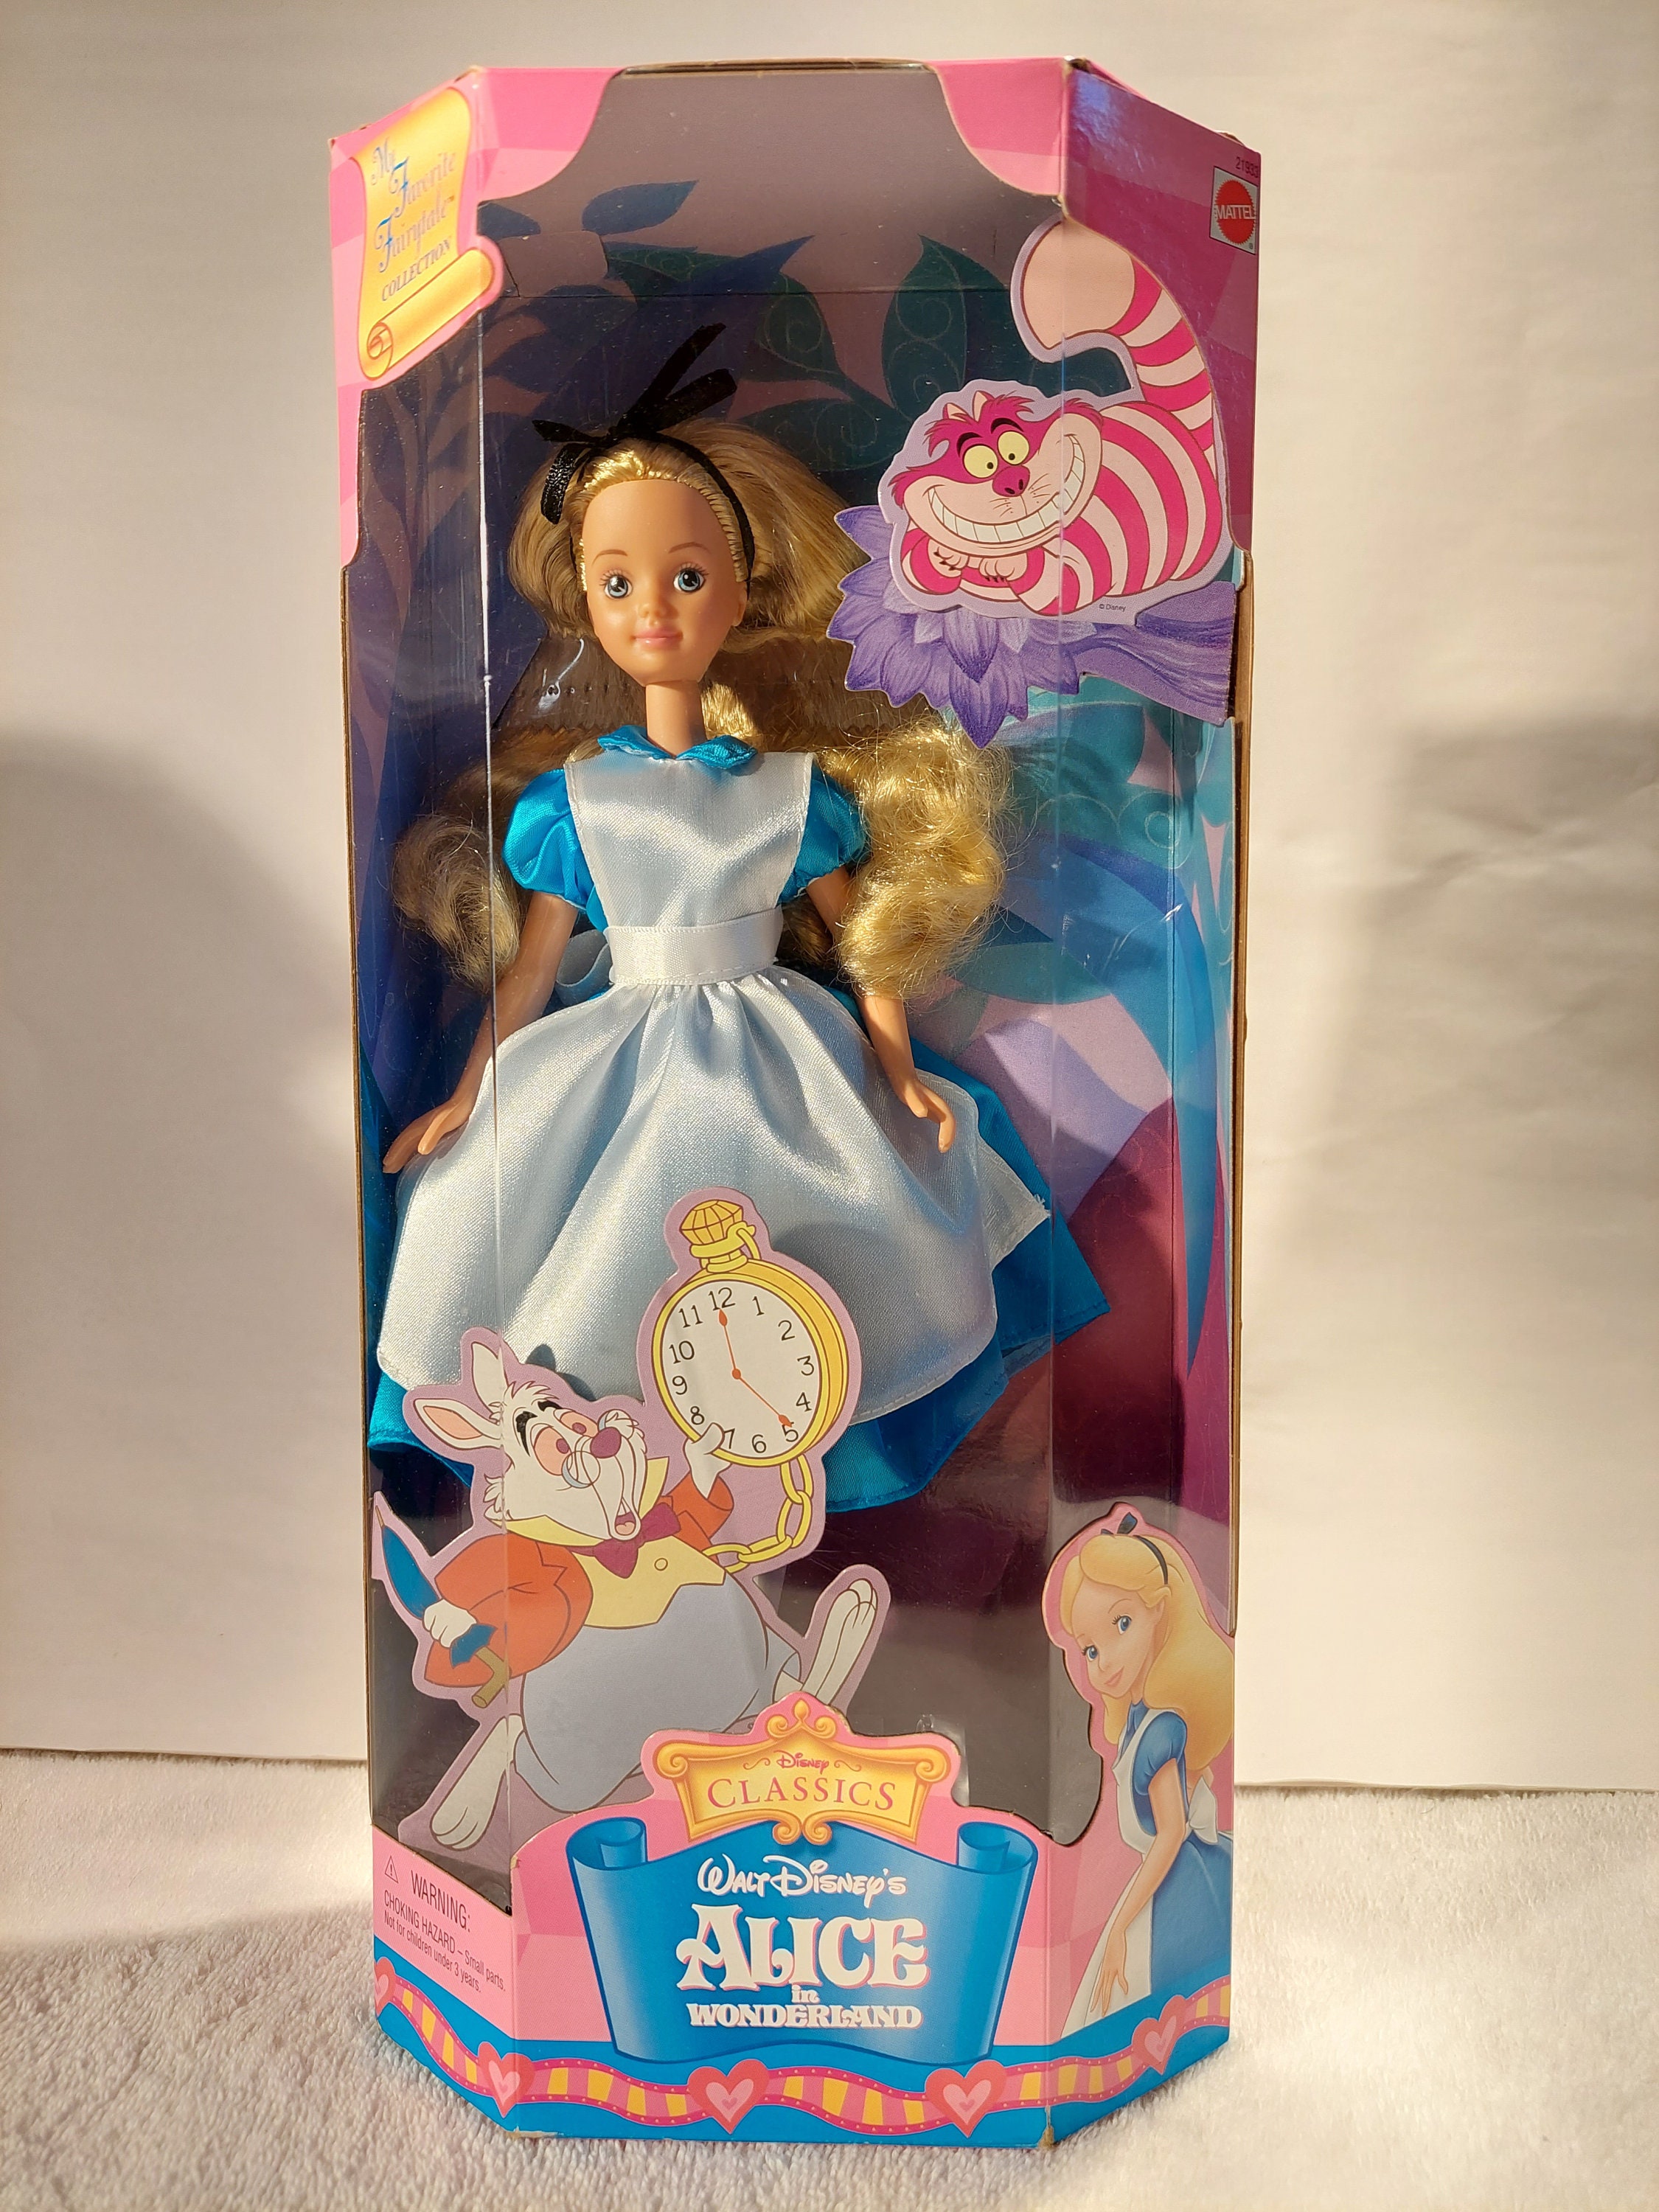 Walt Disneys Alice in Wonderland Barbie Doll NRFB by Mattel 21933